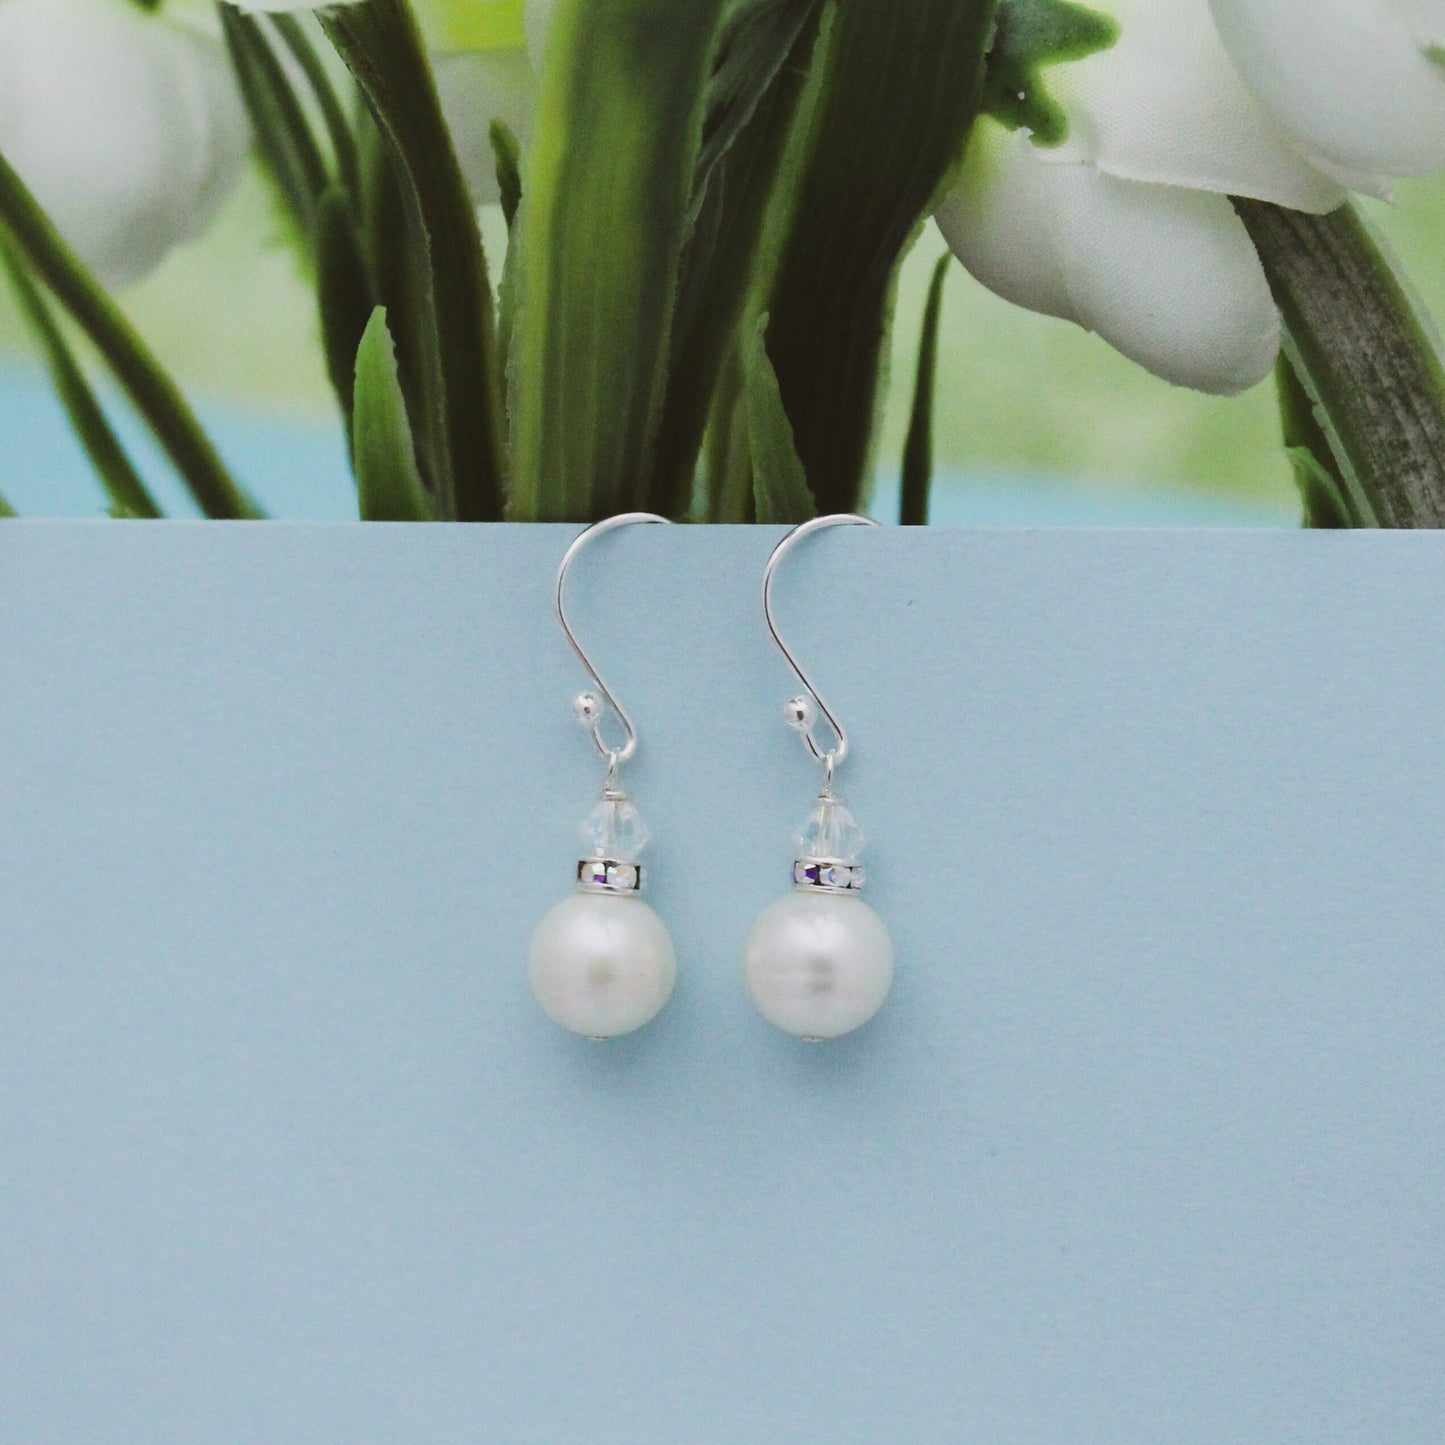 Classic Pearl Drop Earrings, Freshwater Pearl Earrings, White Pearl Earrings, Silver and Pearl Earrings, Bridesmaid Earrings, Minimalist